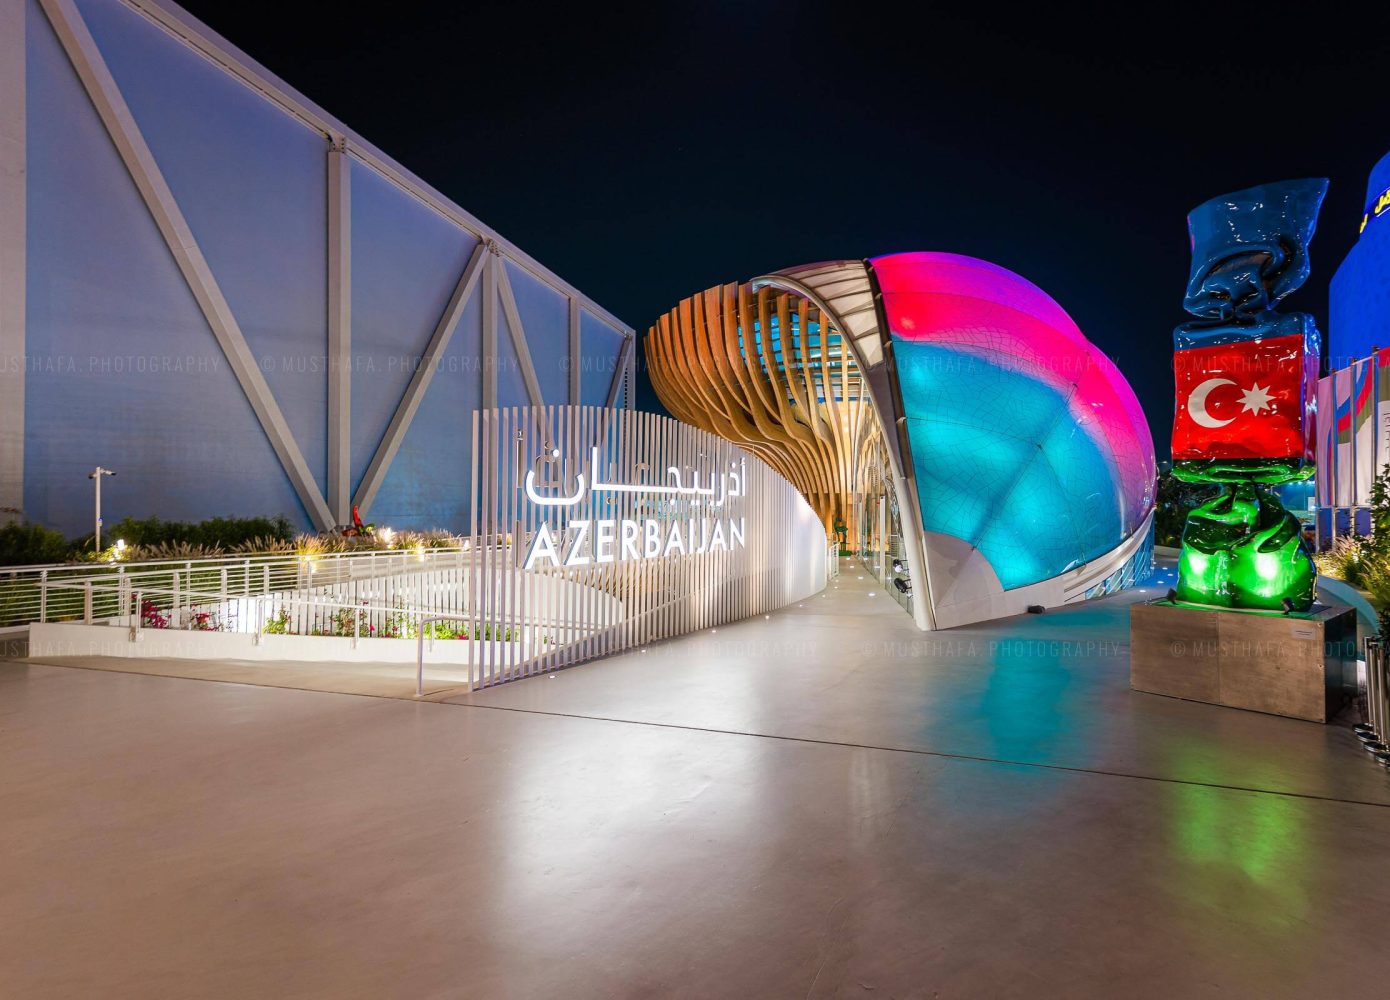 Azerbaijan Pavilion Photography Expo 2020 Dubai Photographer Architecture Interior 02